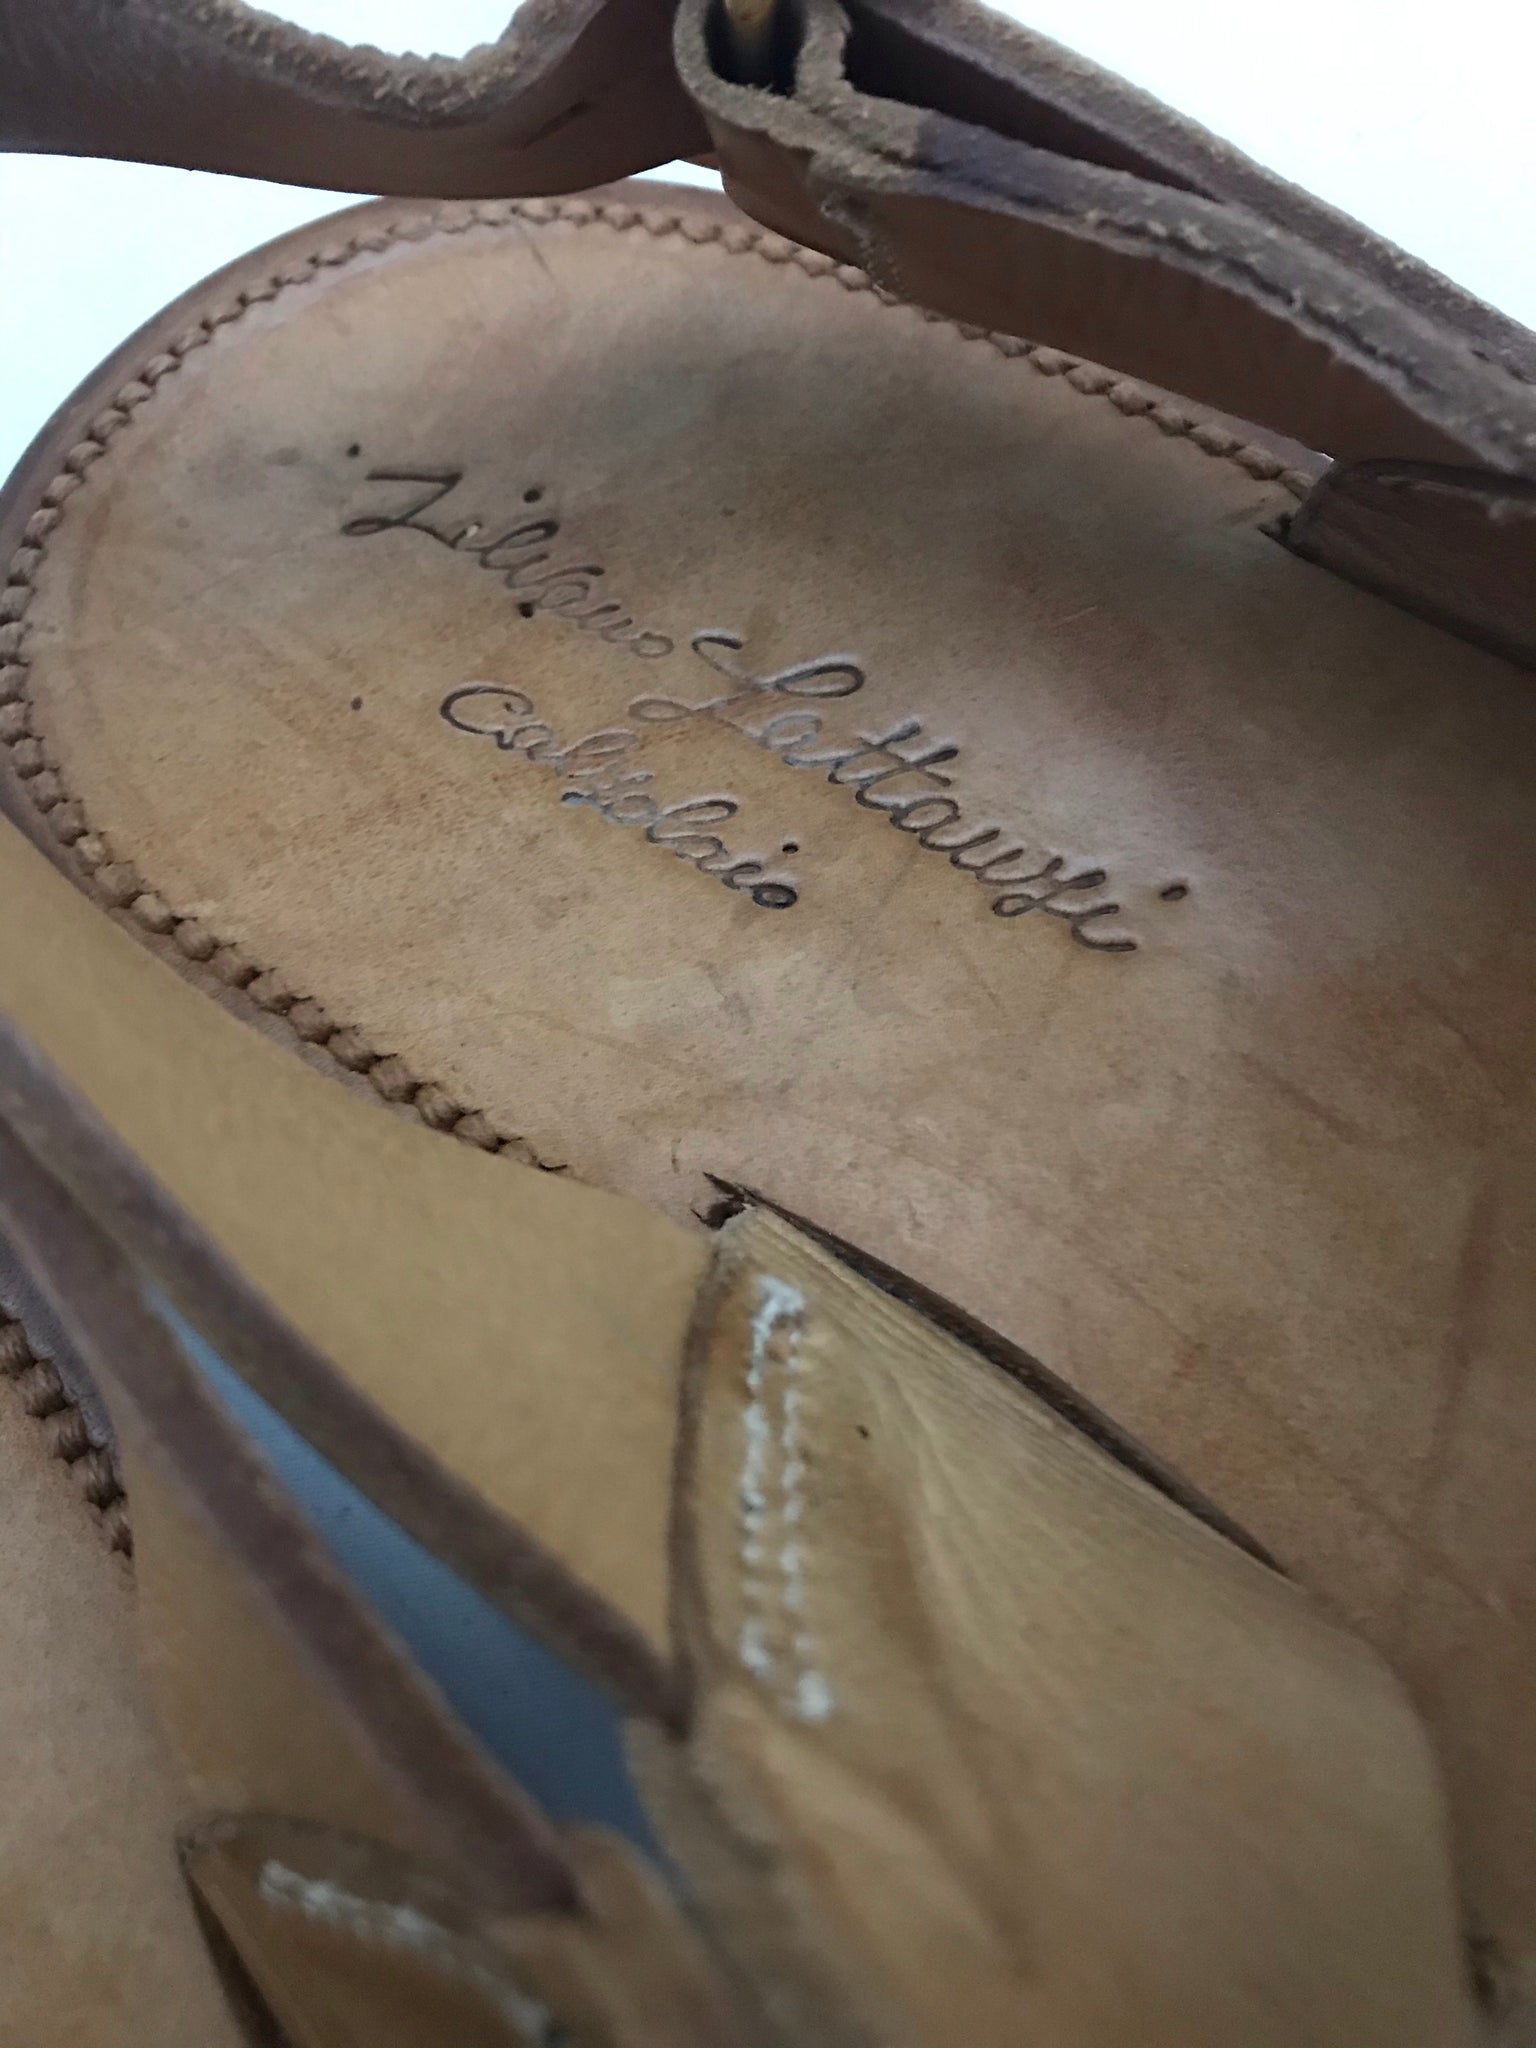 Isabella's Wardrobe Silvano Lattanza Gents Leather Sandals.